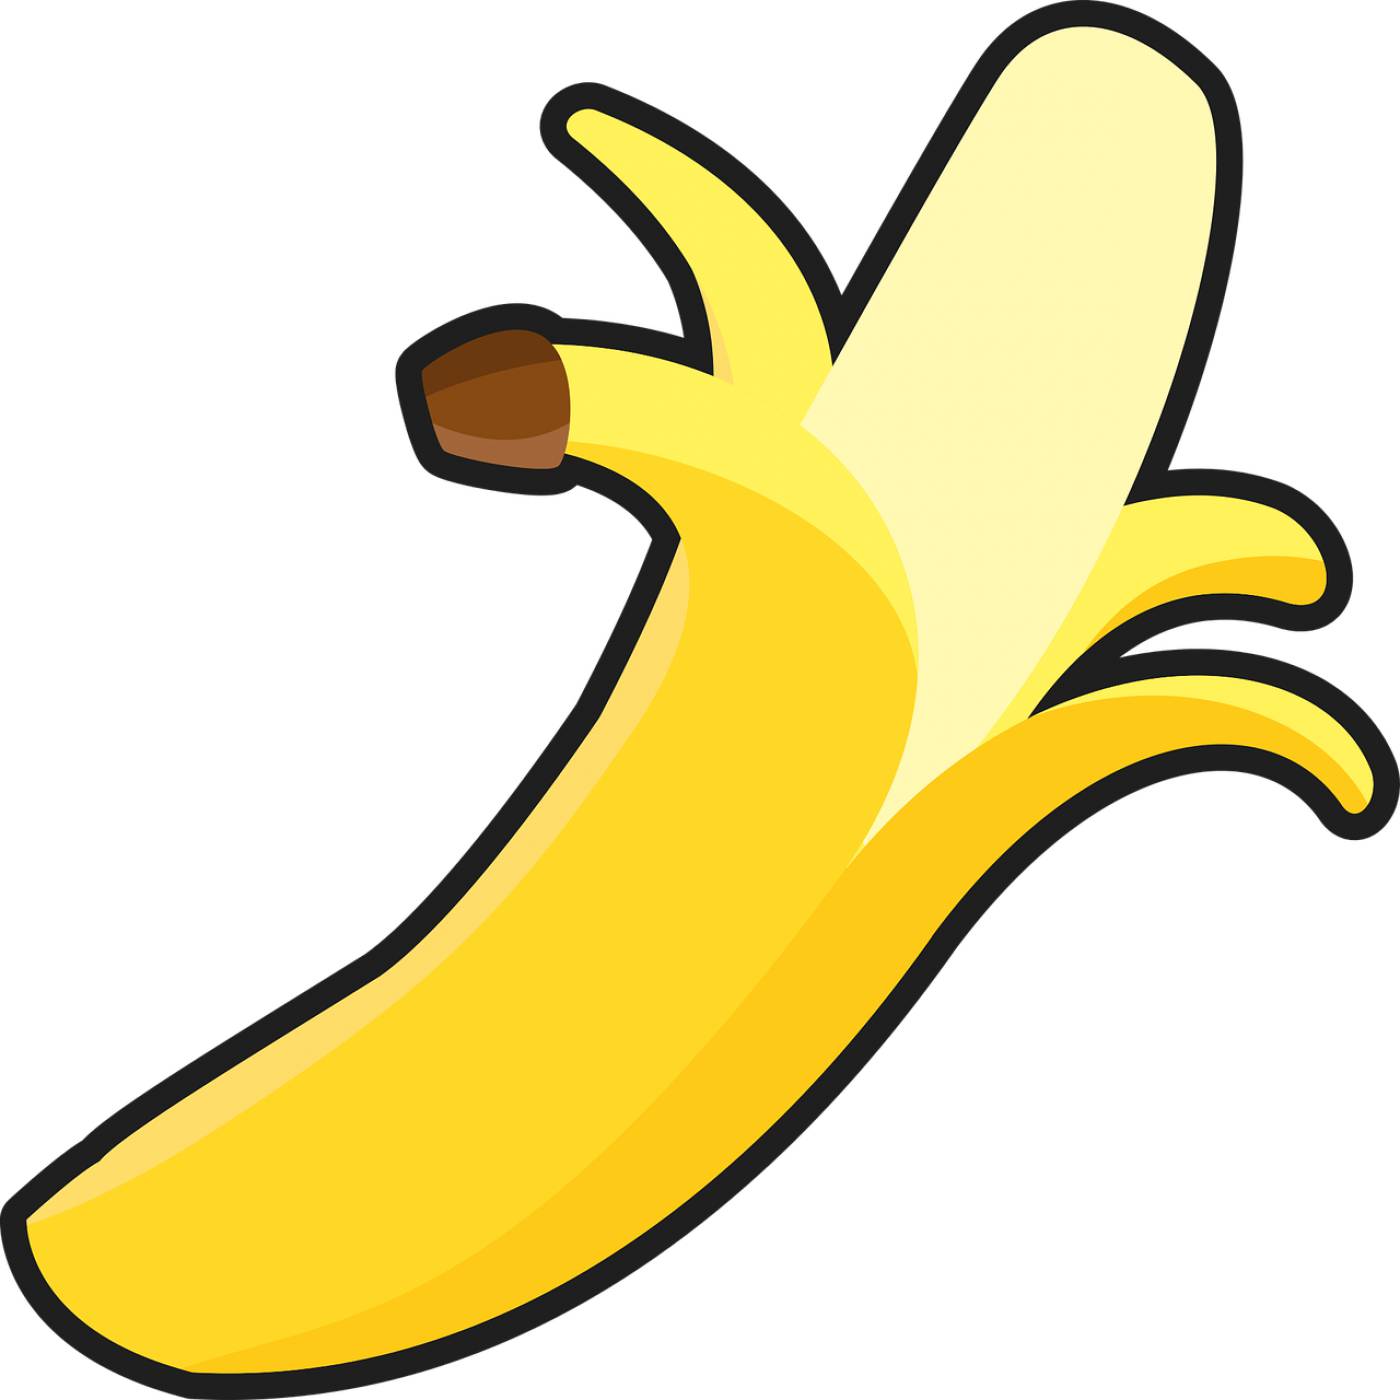 banana flat food fruit healthy  svg vector